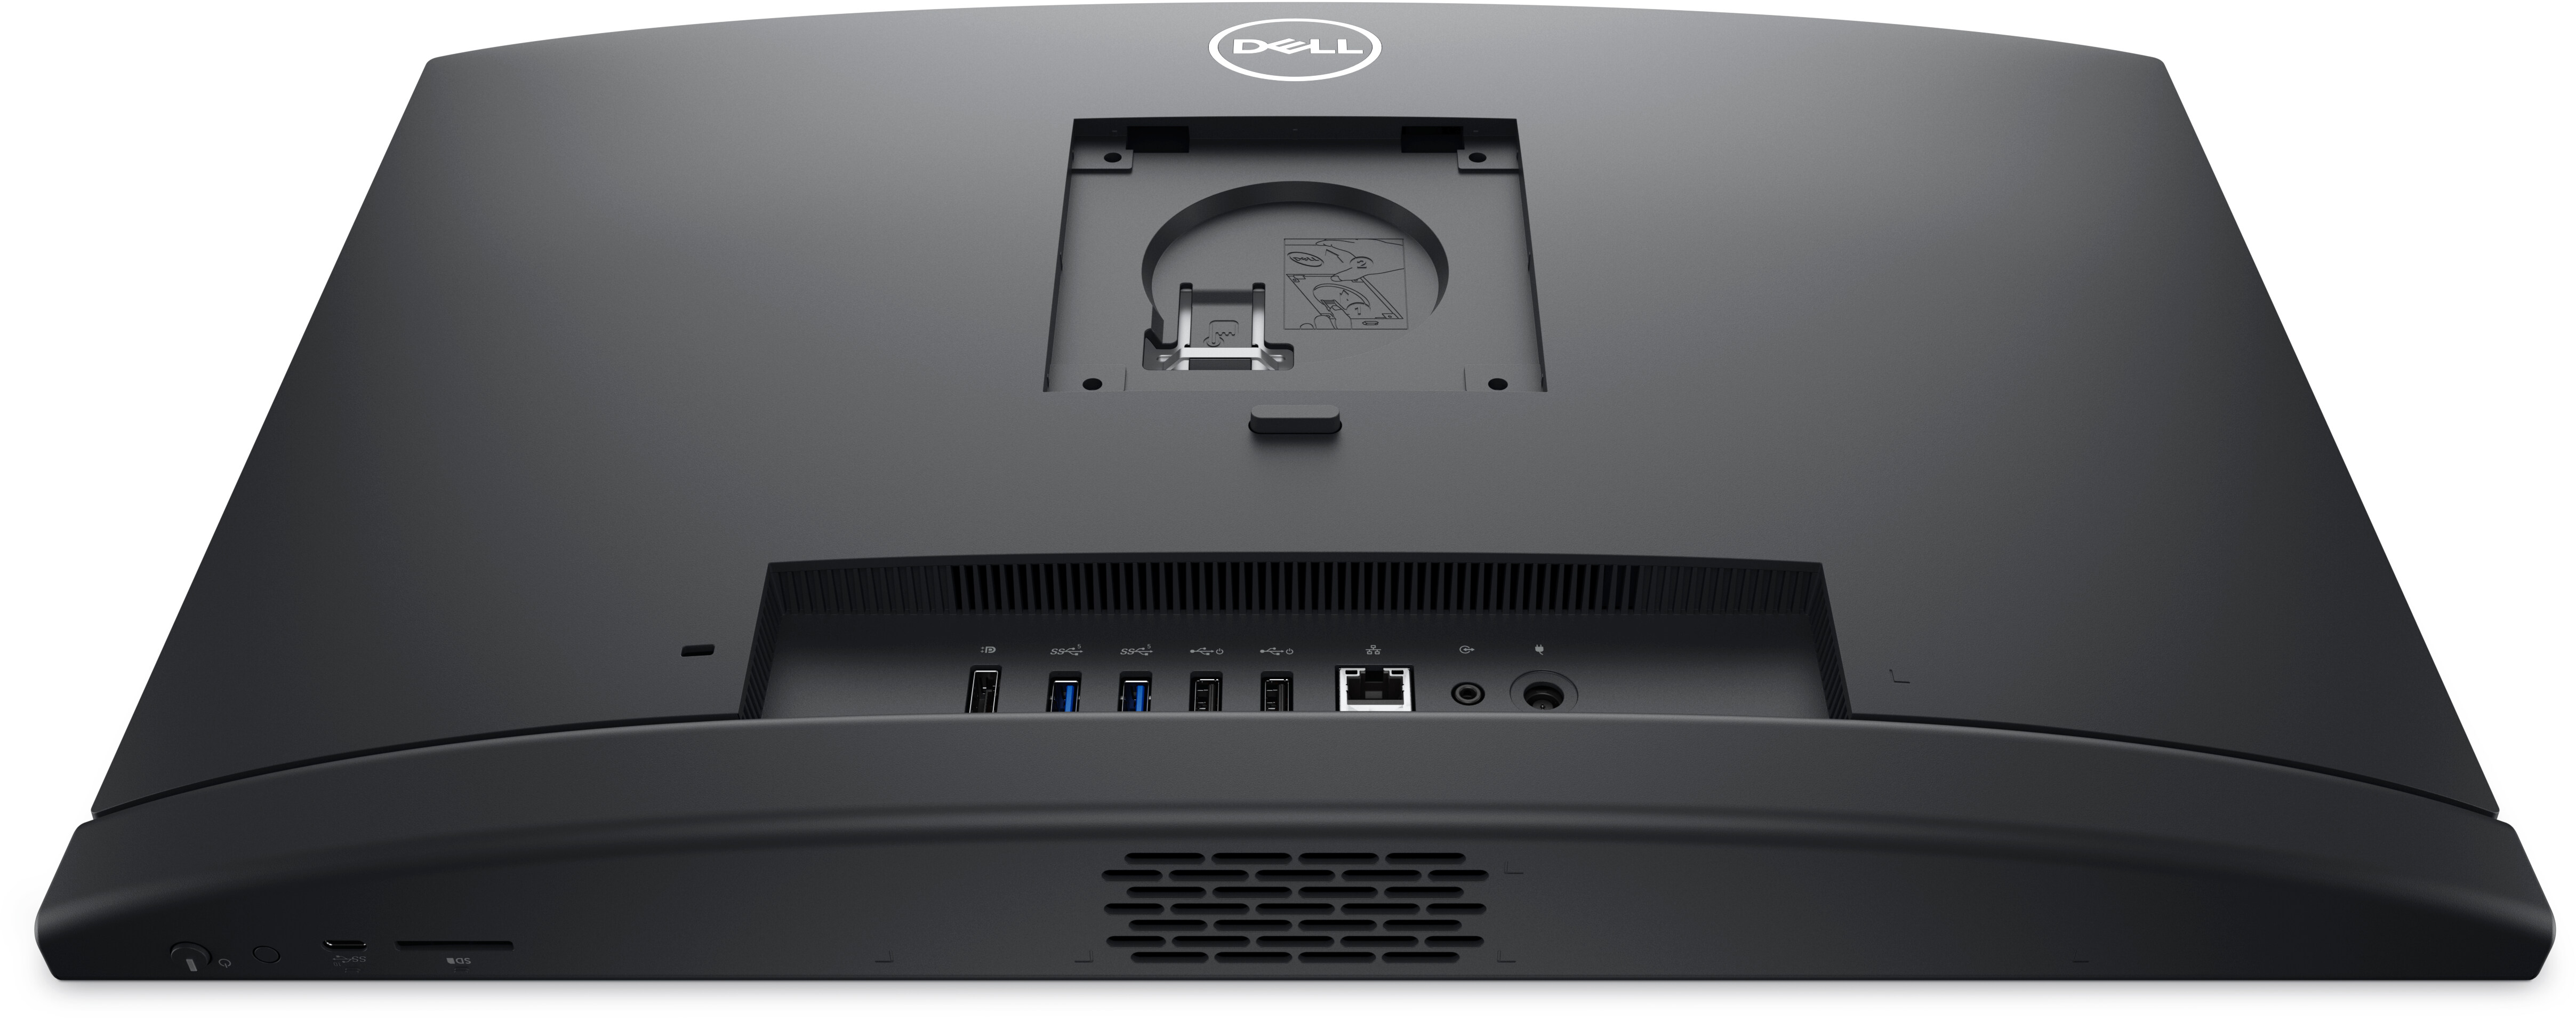 Dell OptiPlex All-in-One PCs & Desktop Computers | Dell Singapore